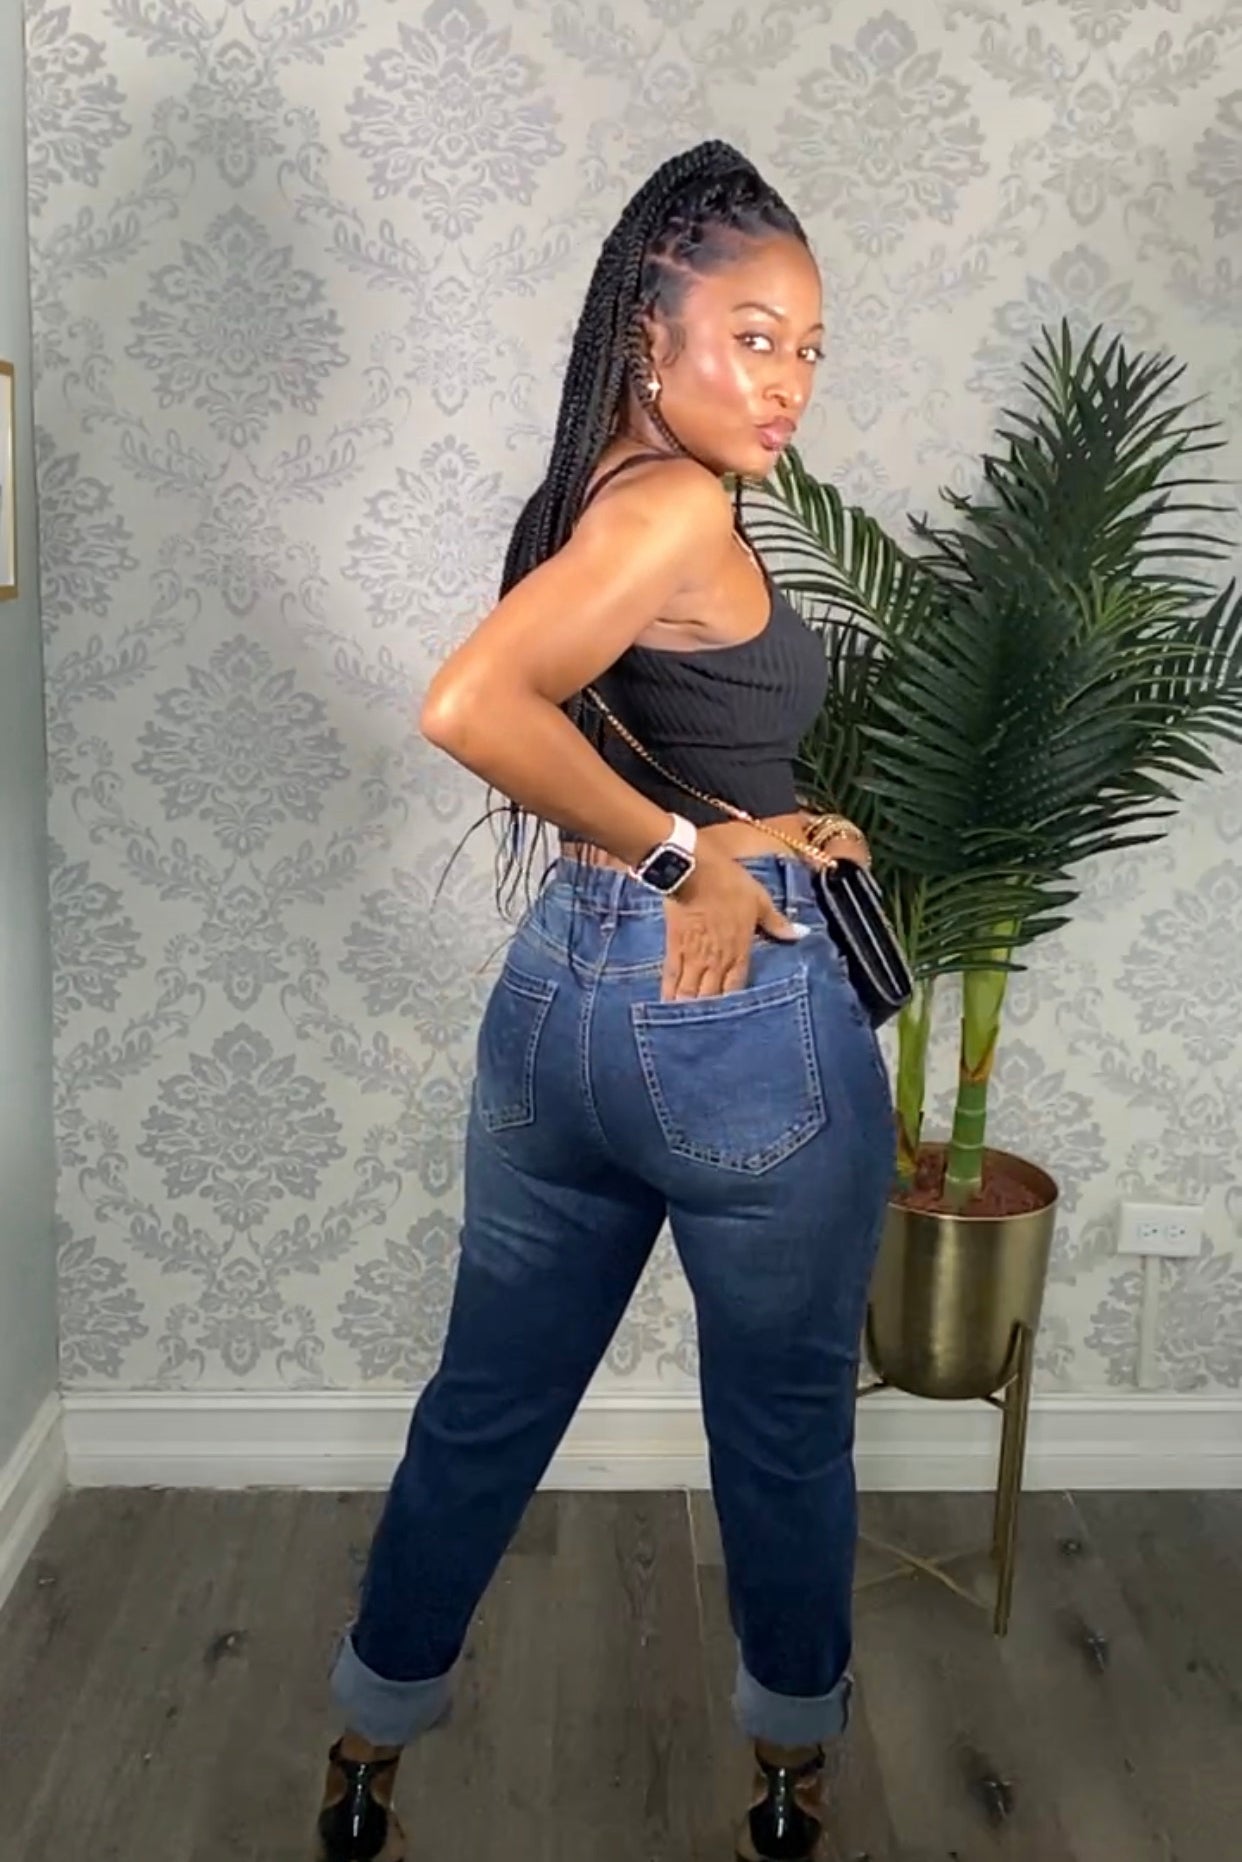 Girls Stylish Denim Pants Casual Jeans Pockets Straight Wide Leg Blue  Trousers | eBay